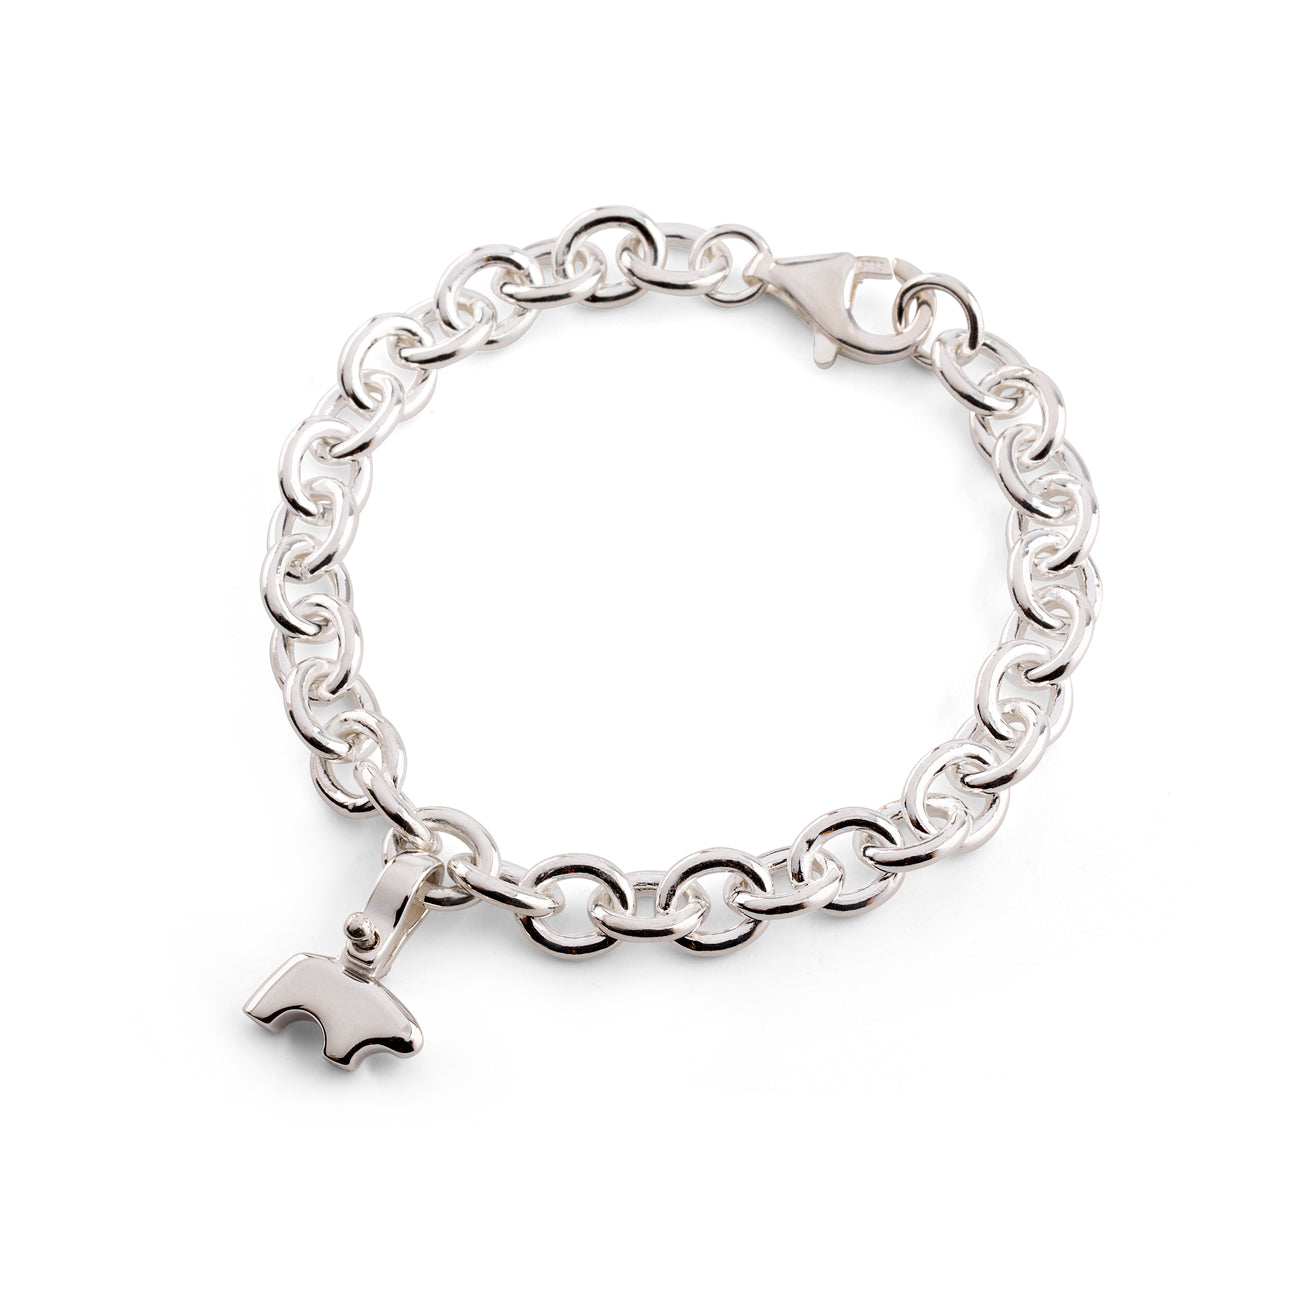 Tiffany & Co Silver Shopping Bag Charm Bracelet Bangle Link 